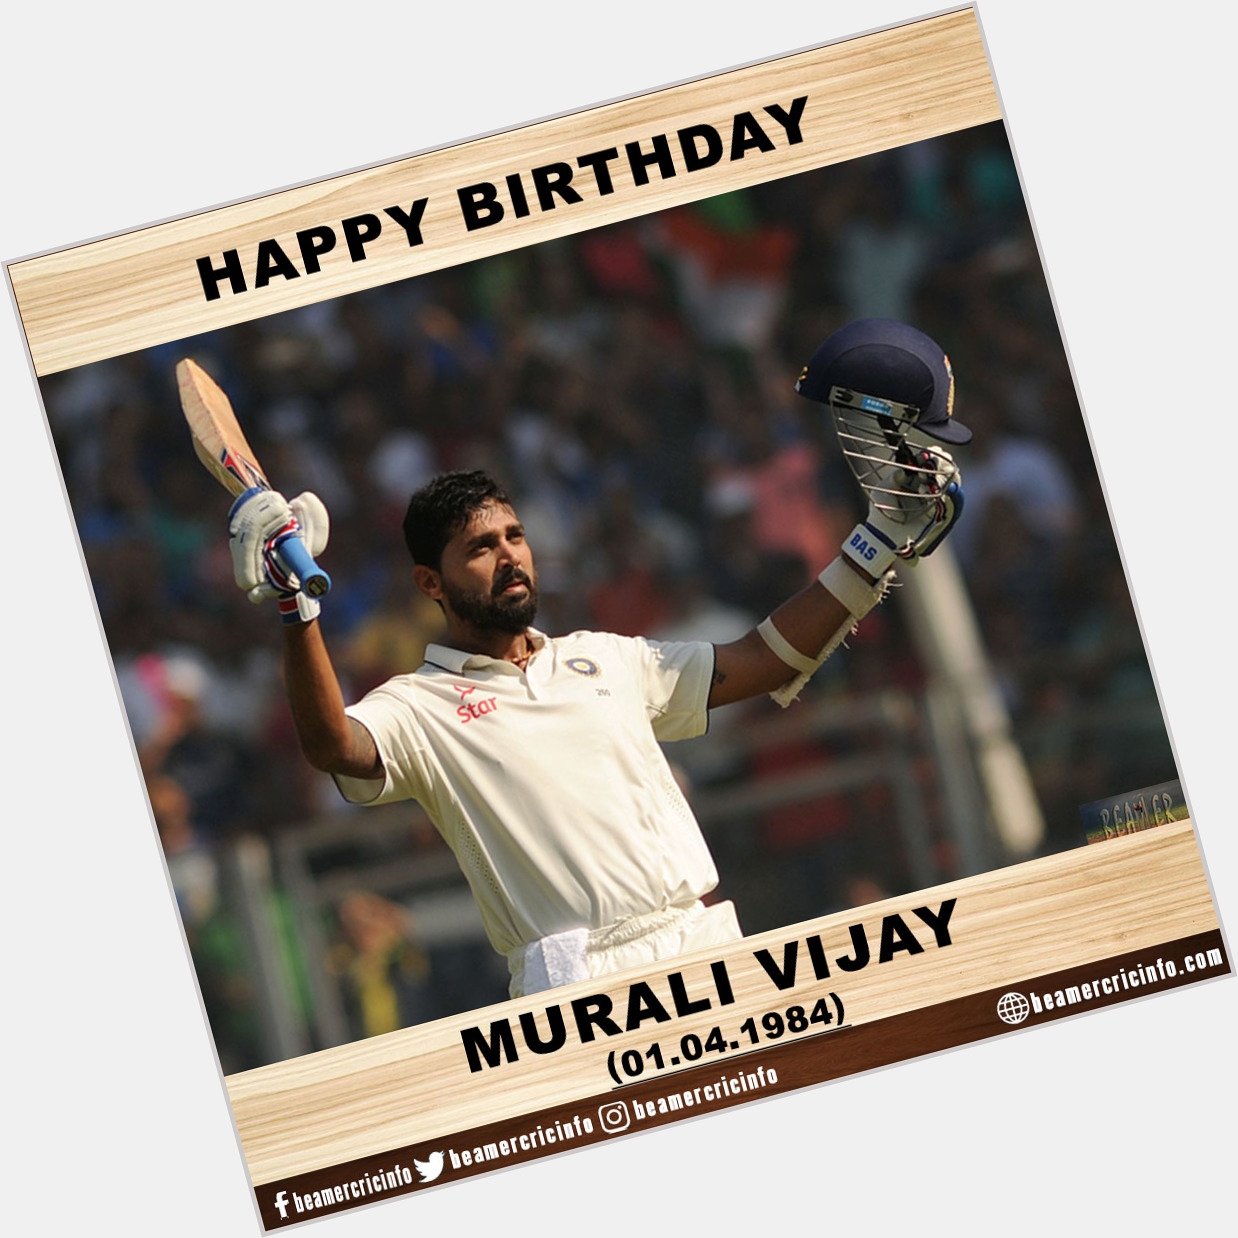 Happy Birthday!!!
Murali Vijay...       